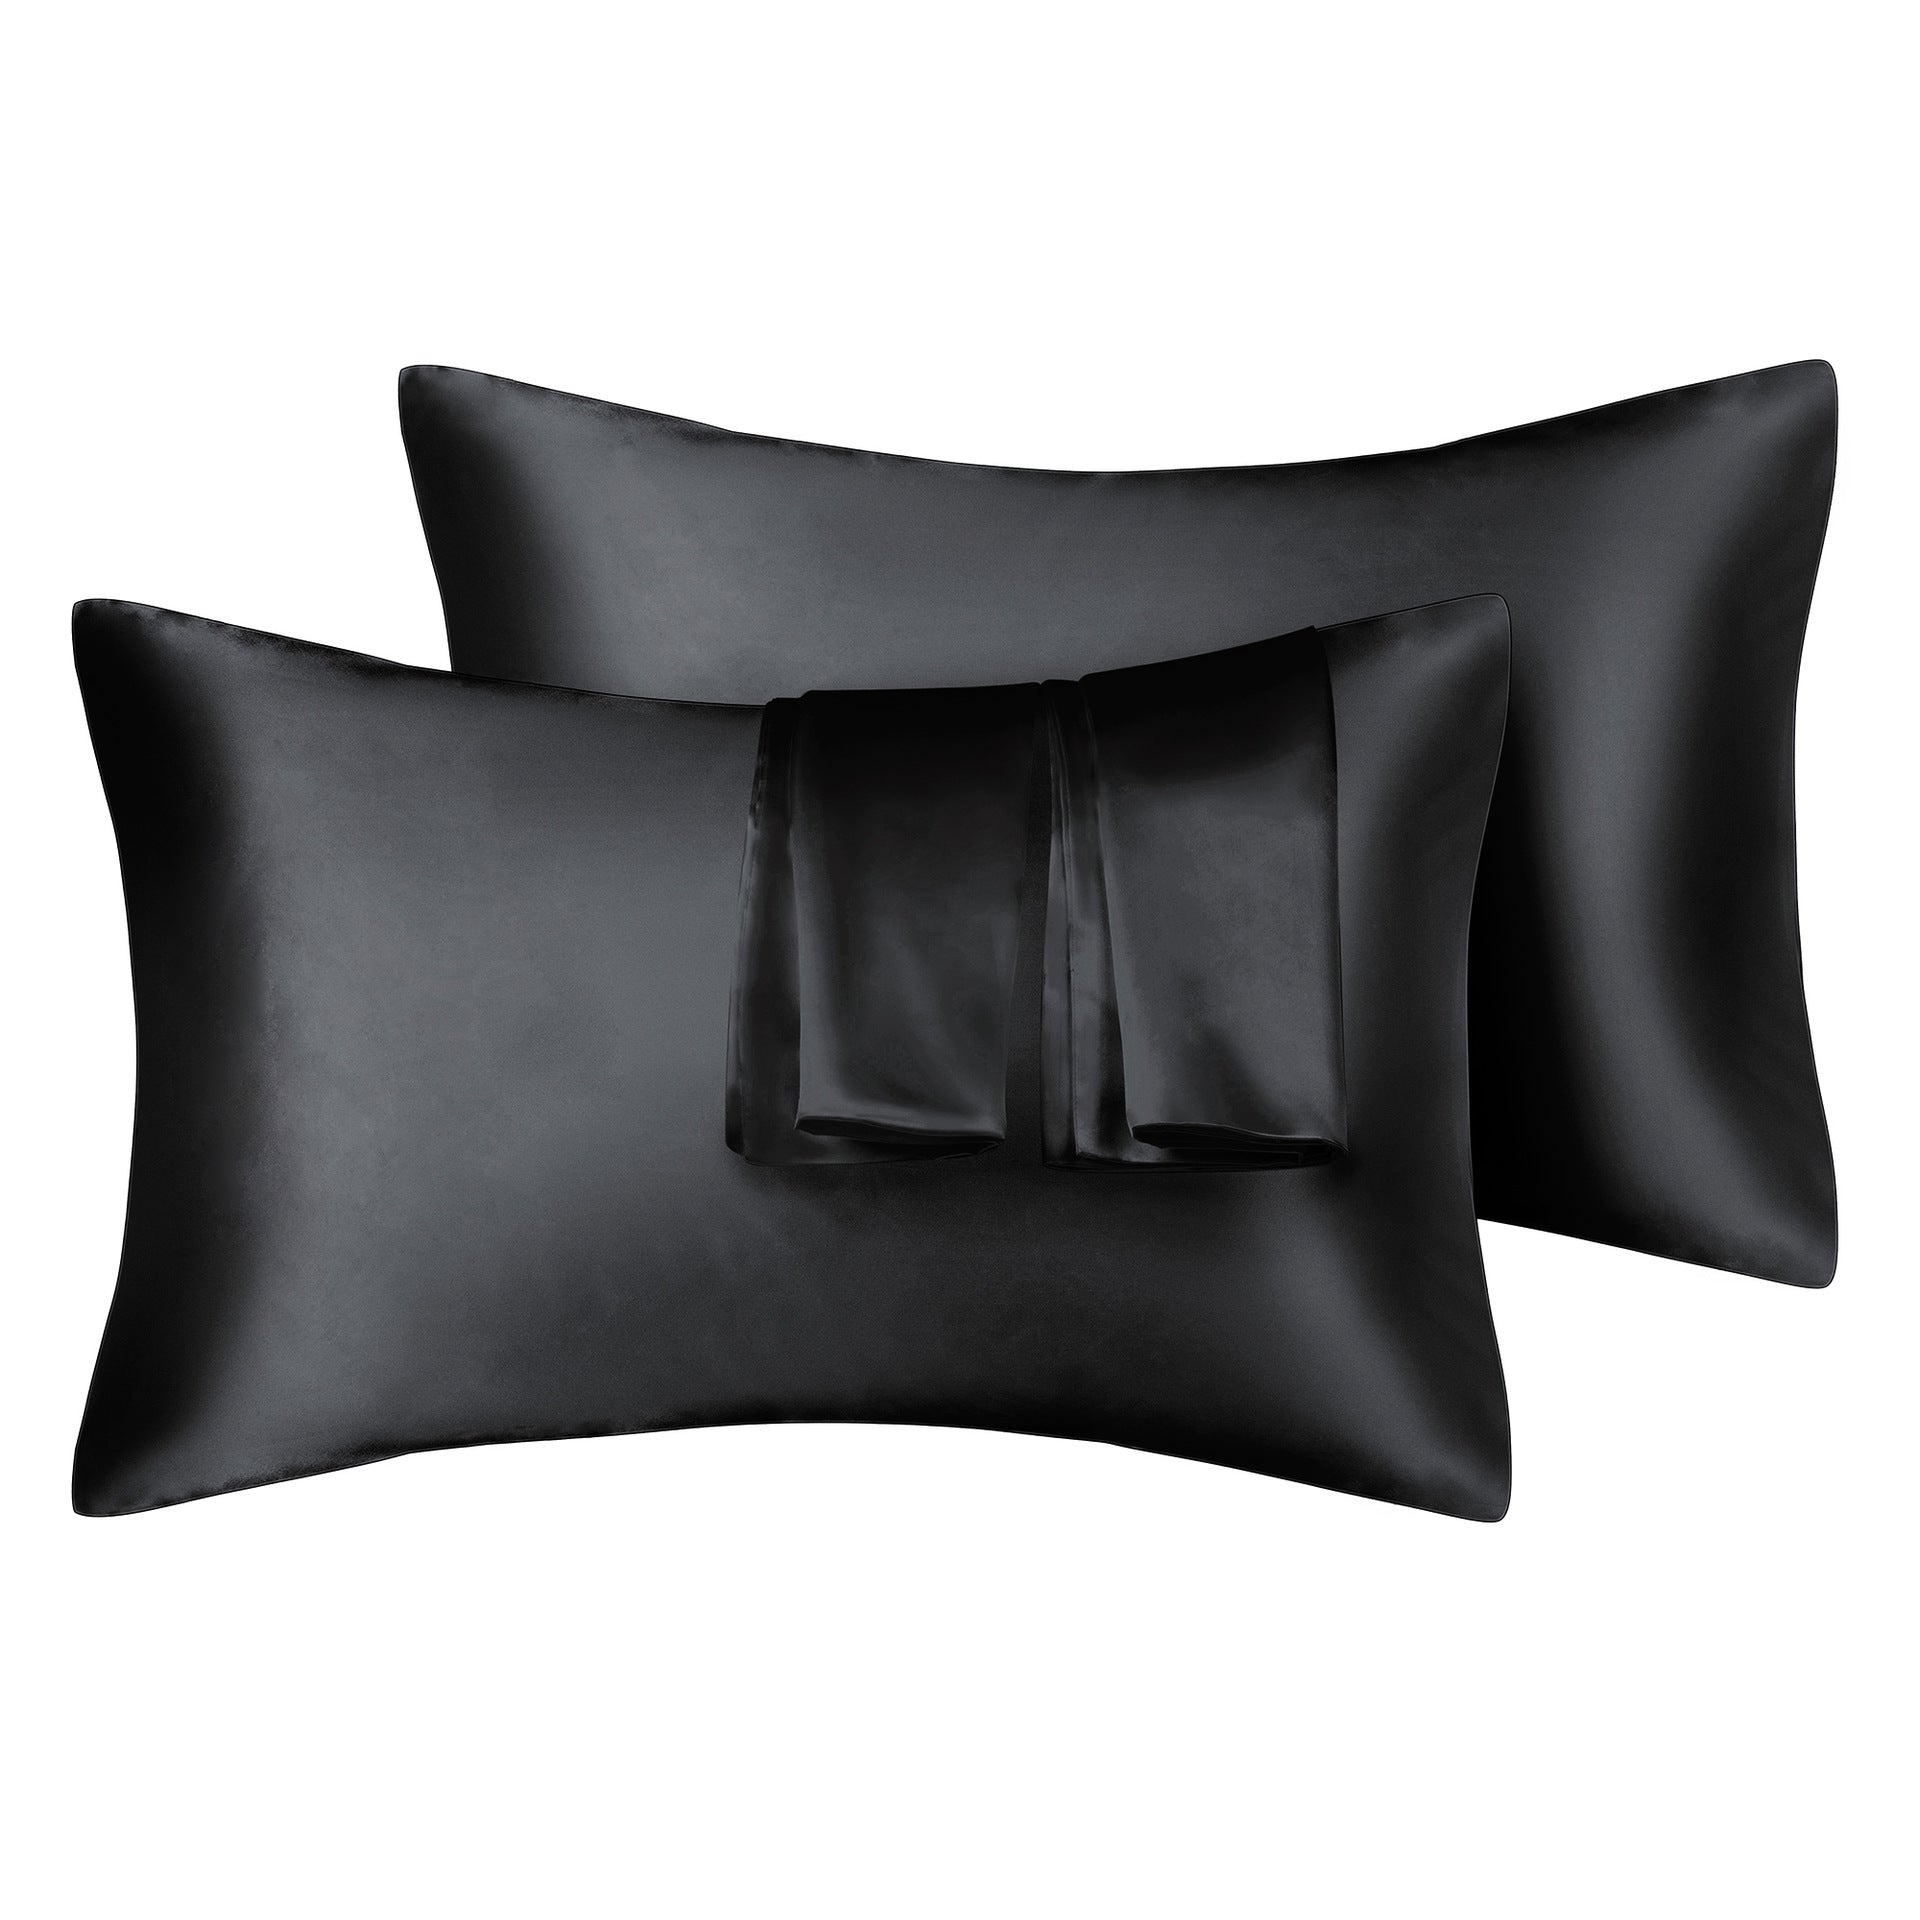 Silky Satin Pillowcase Set